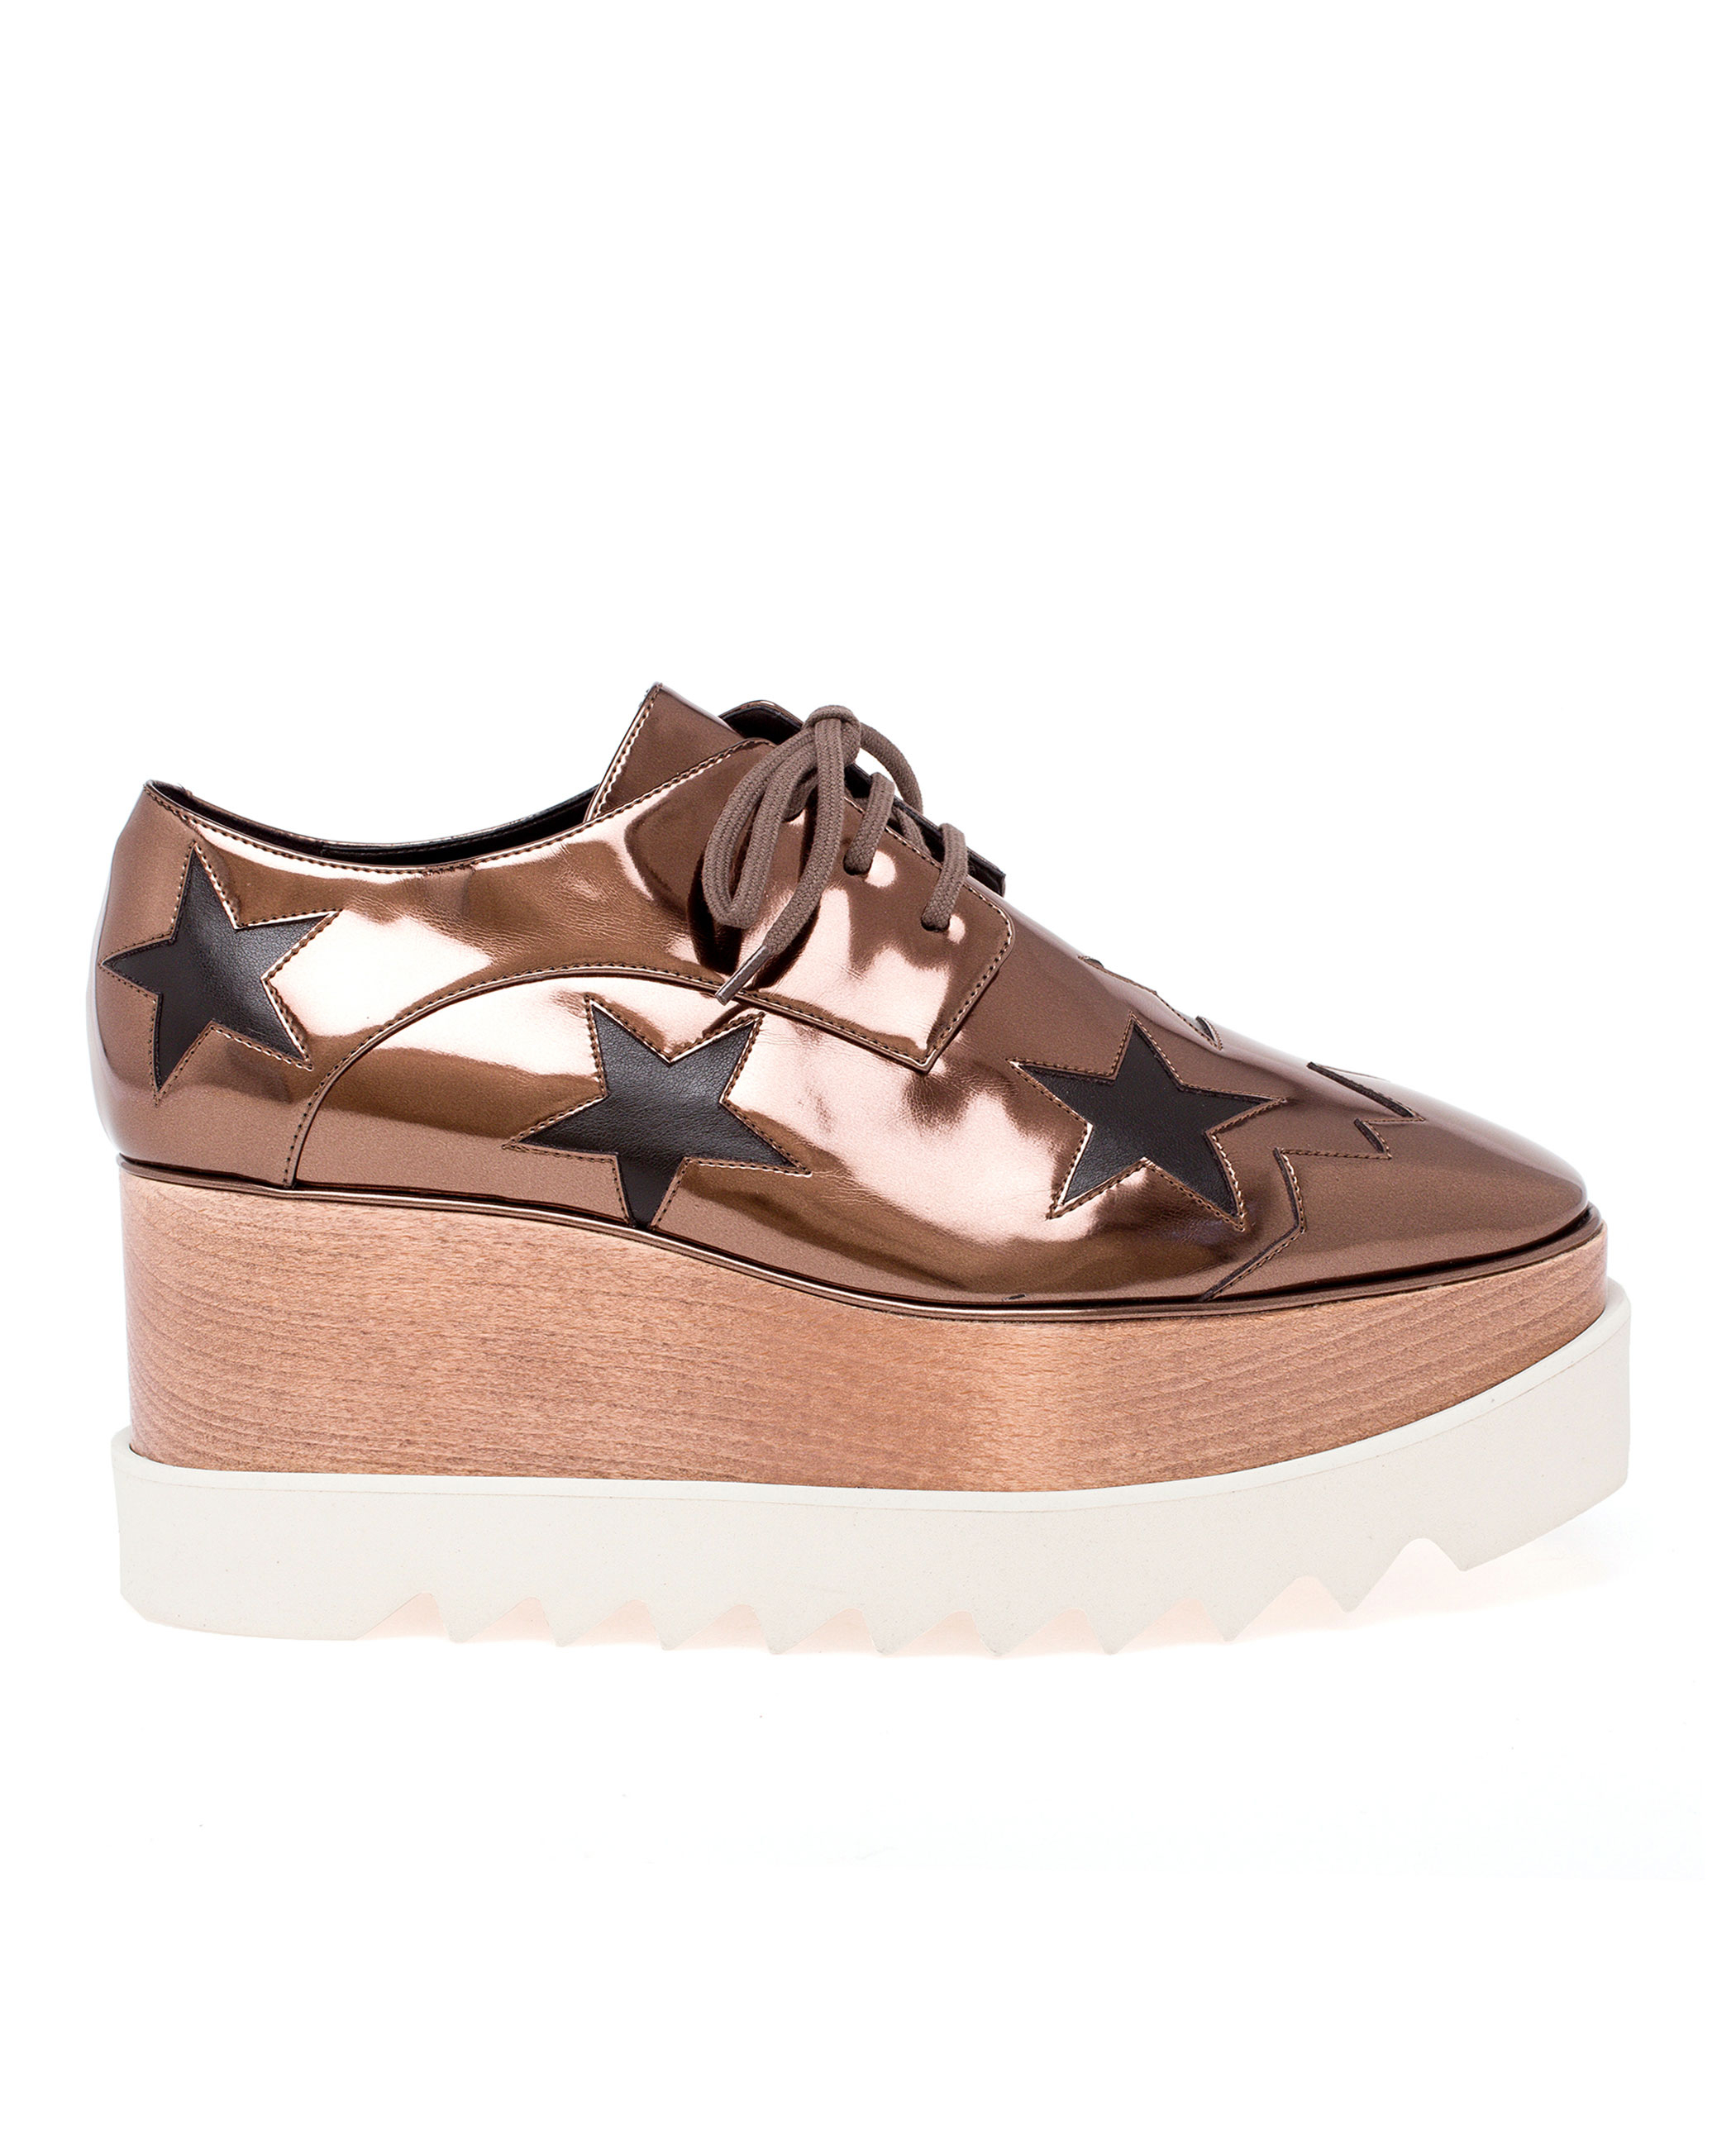 Lyst - Stella mccartney Scarpa Metallic Star Shoes in Metallic